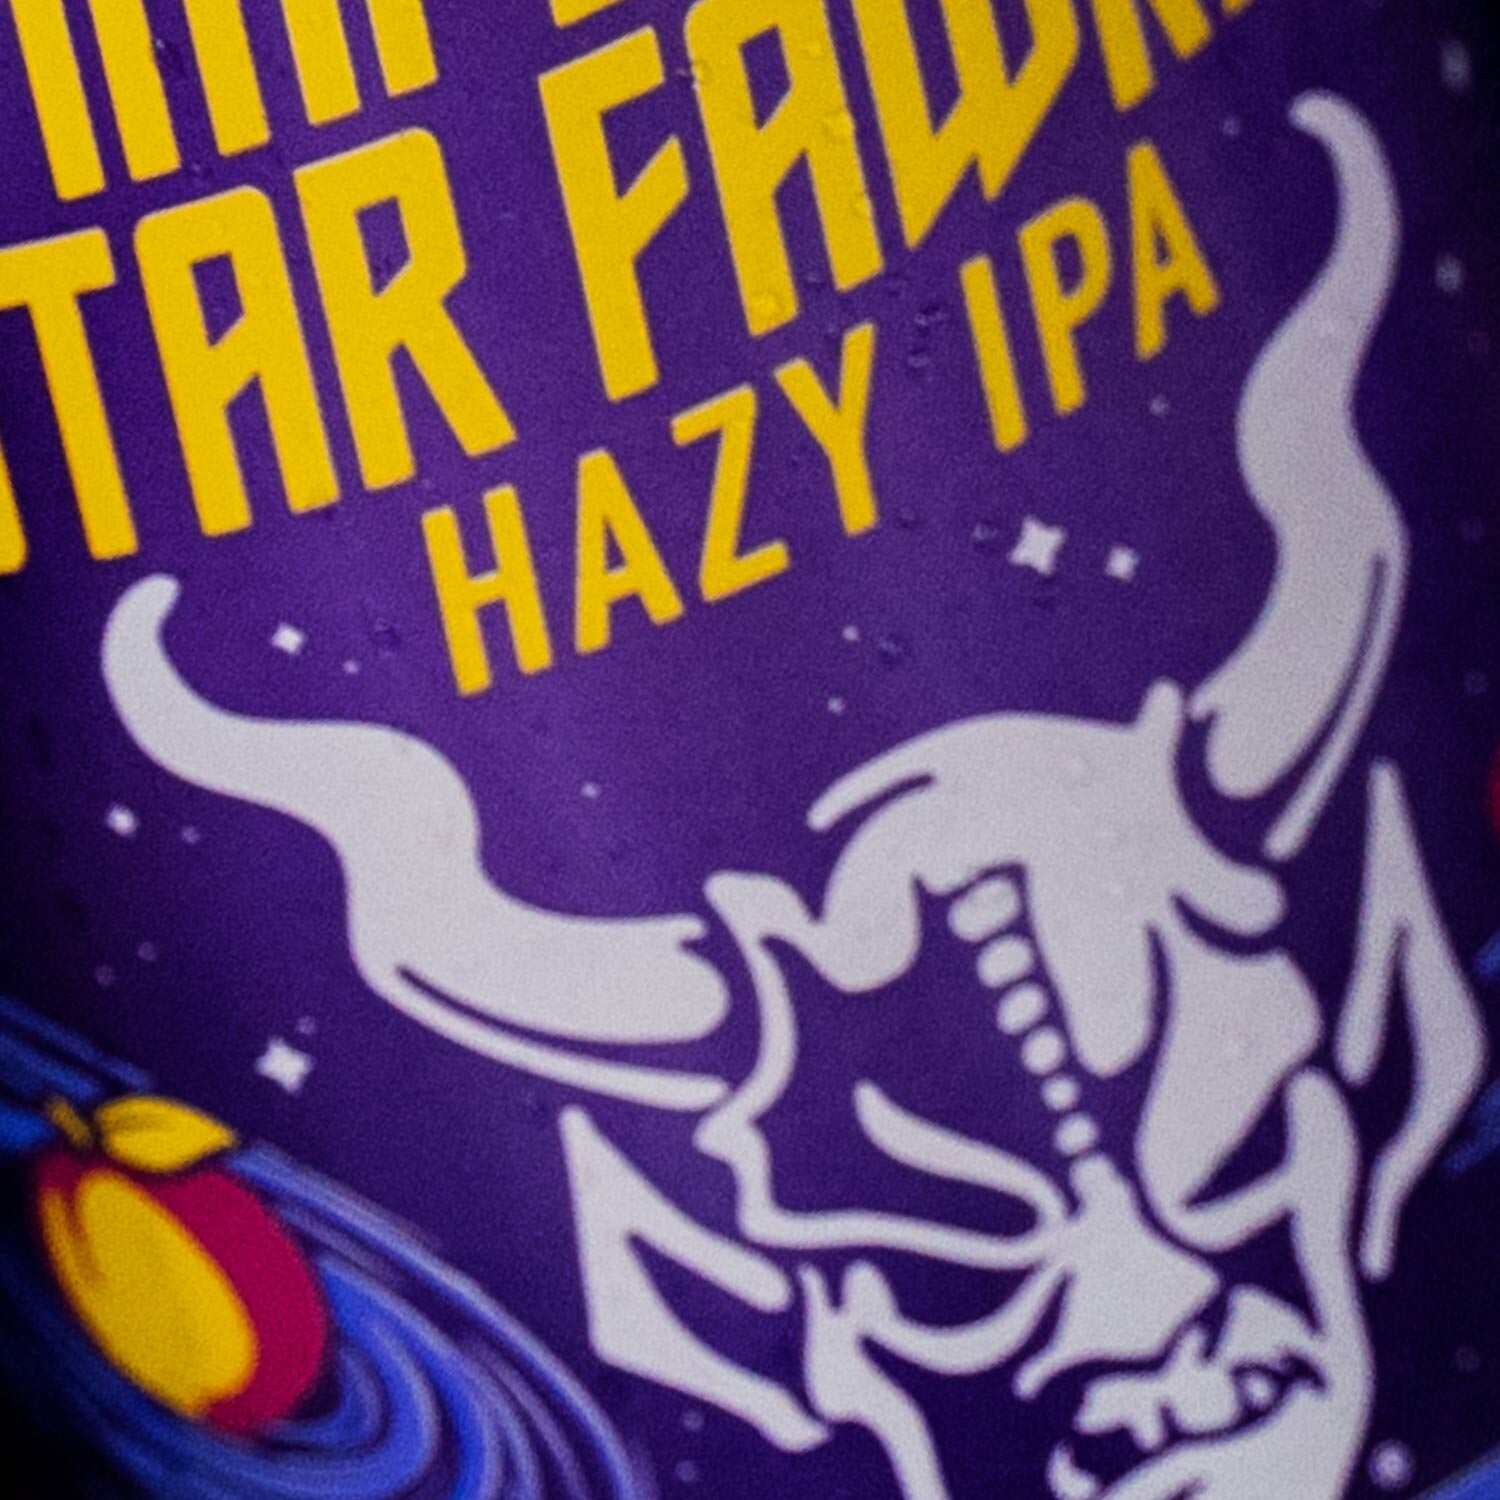 Stone Imperial Star Fawker Hazy IPA close-up